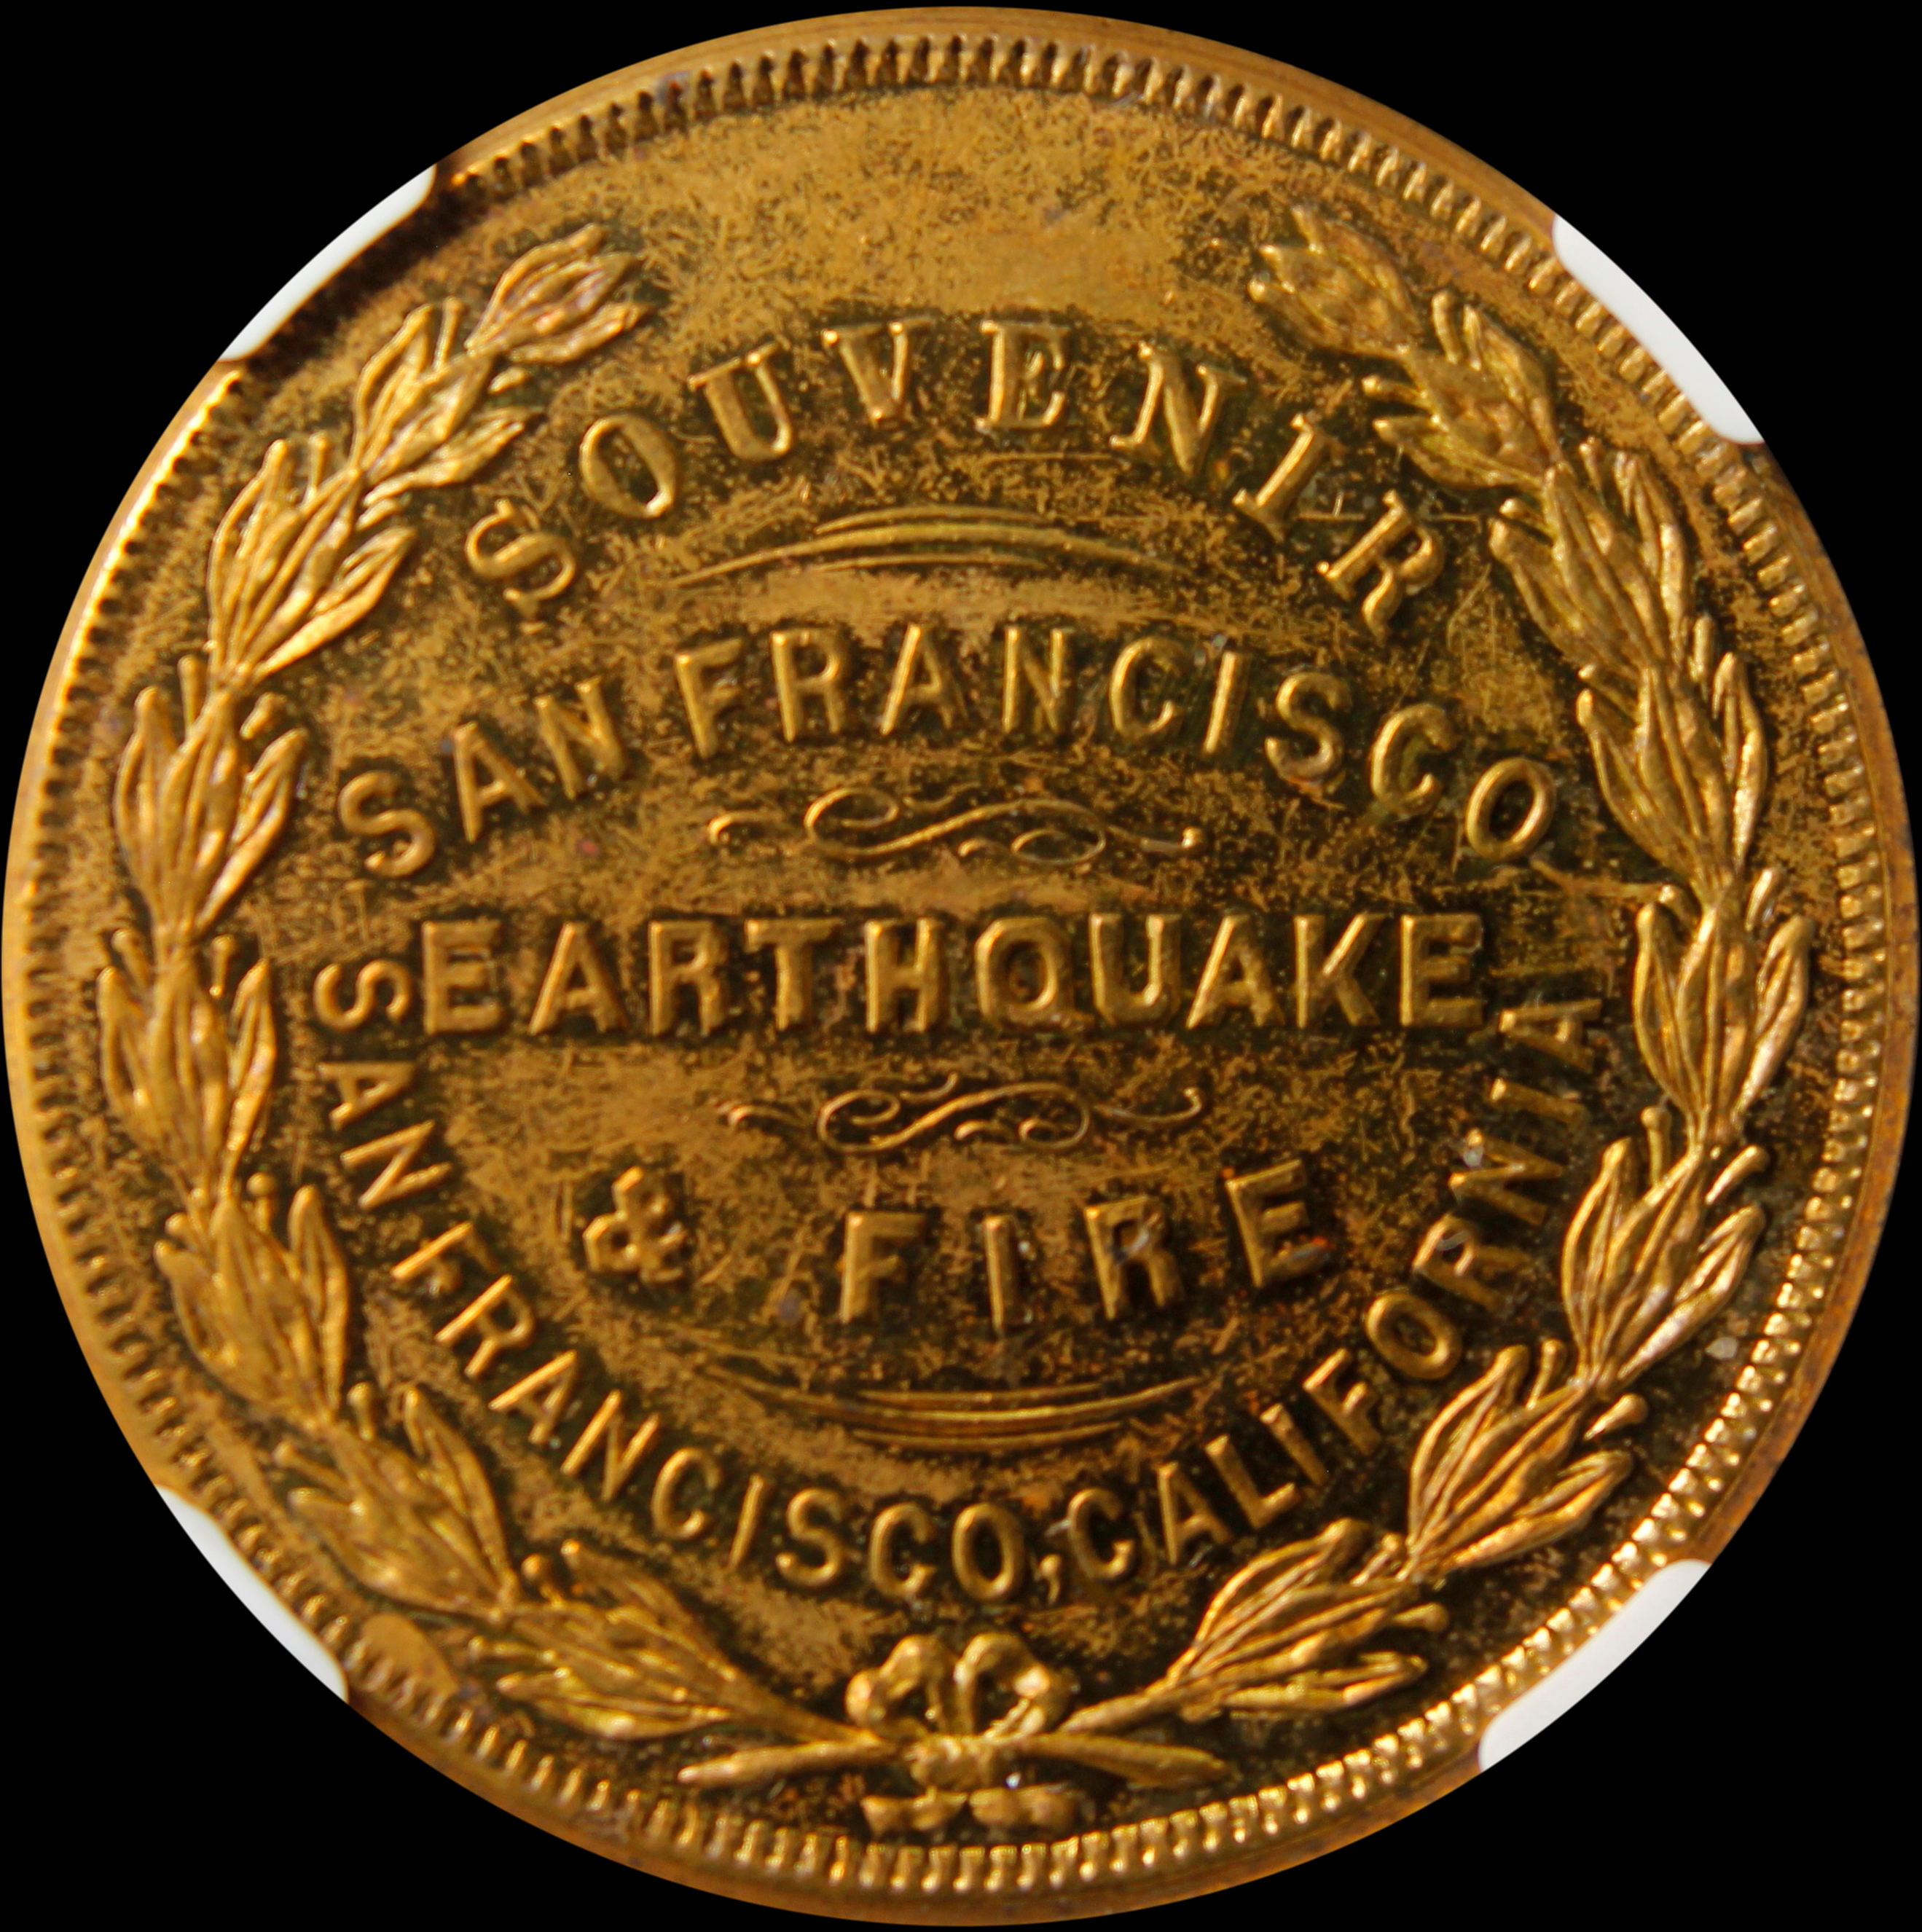 HK-343 1906 San Francisco Earthquake Cliff House Souvenir SCD